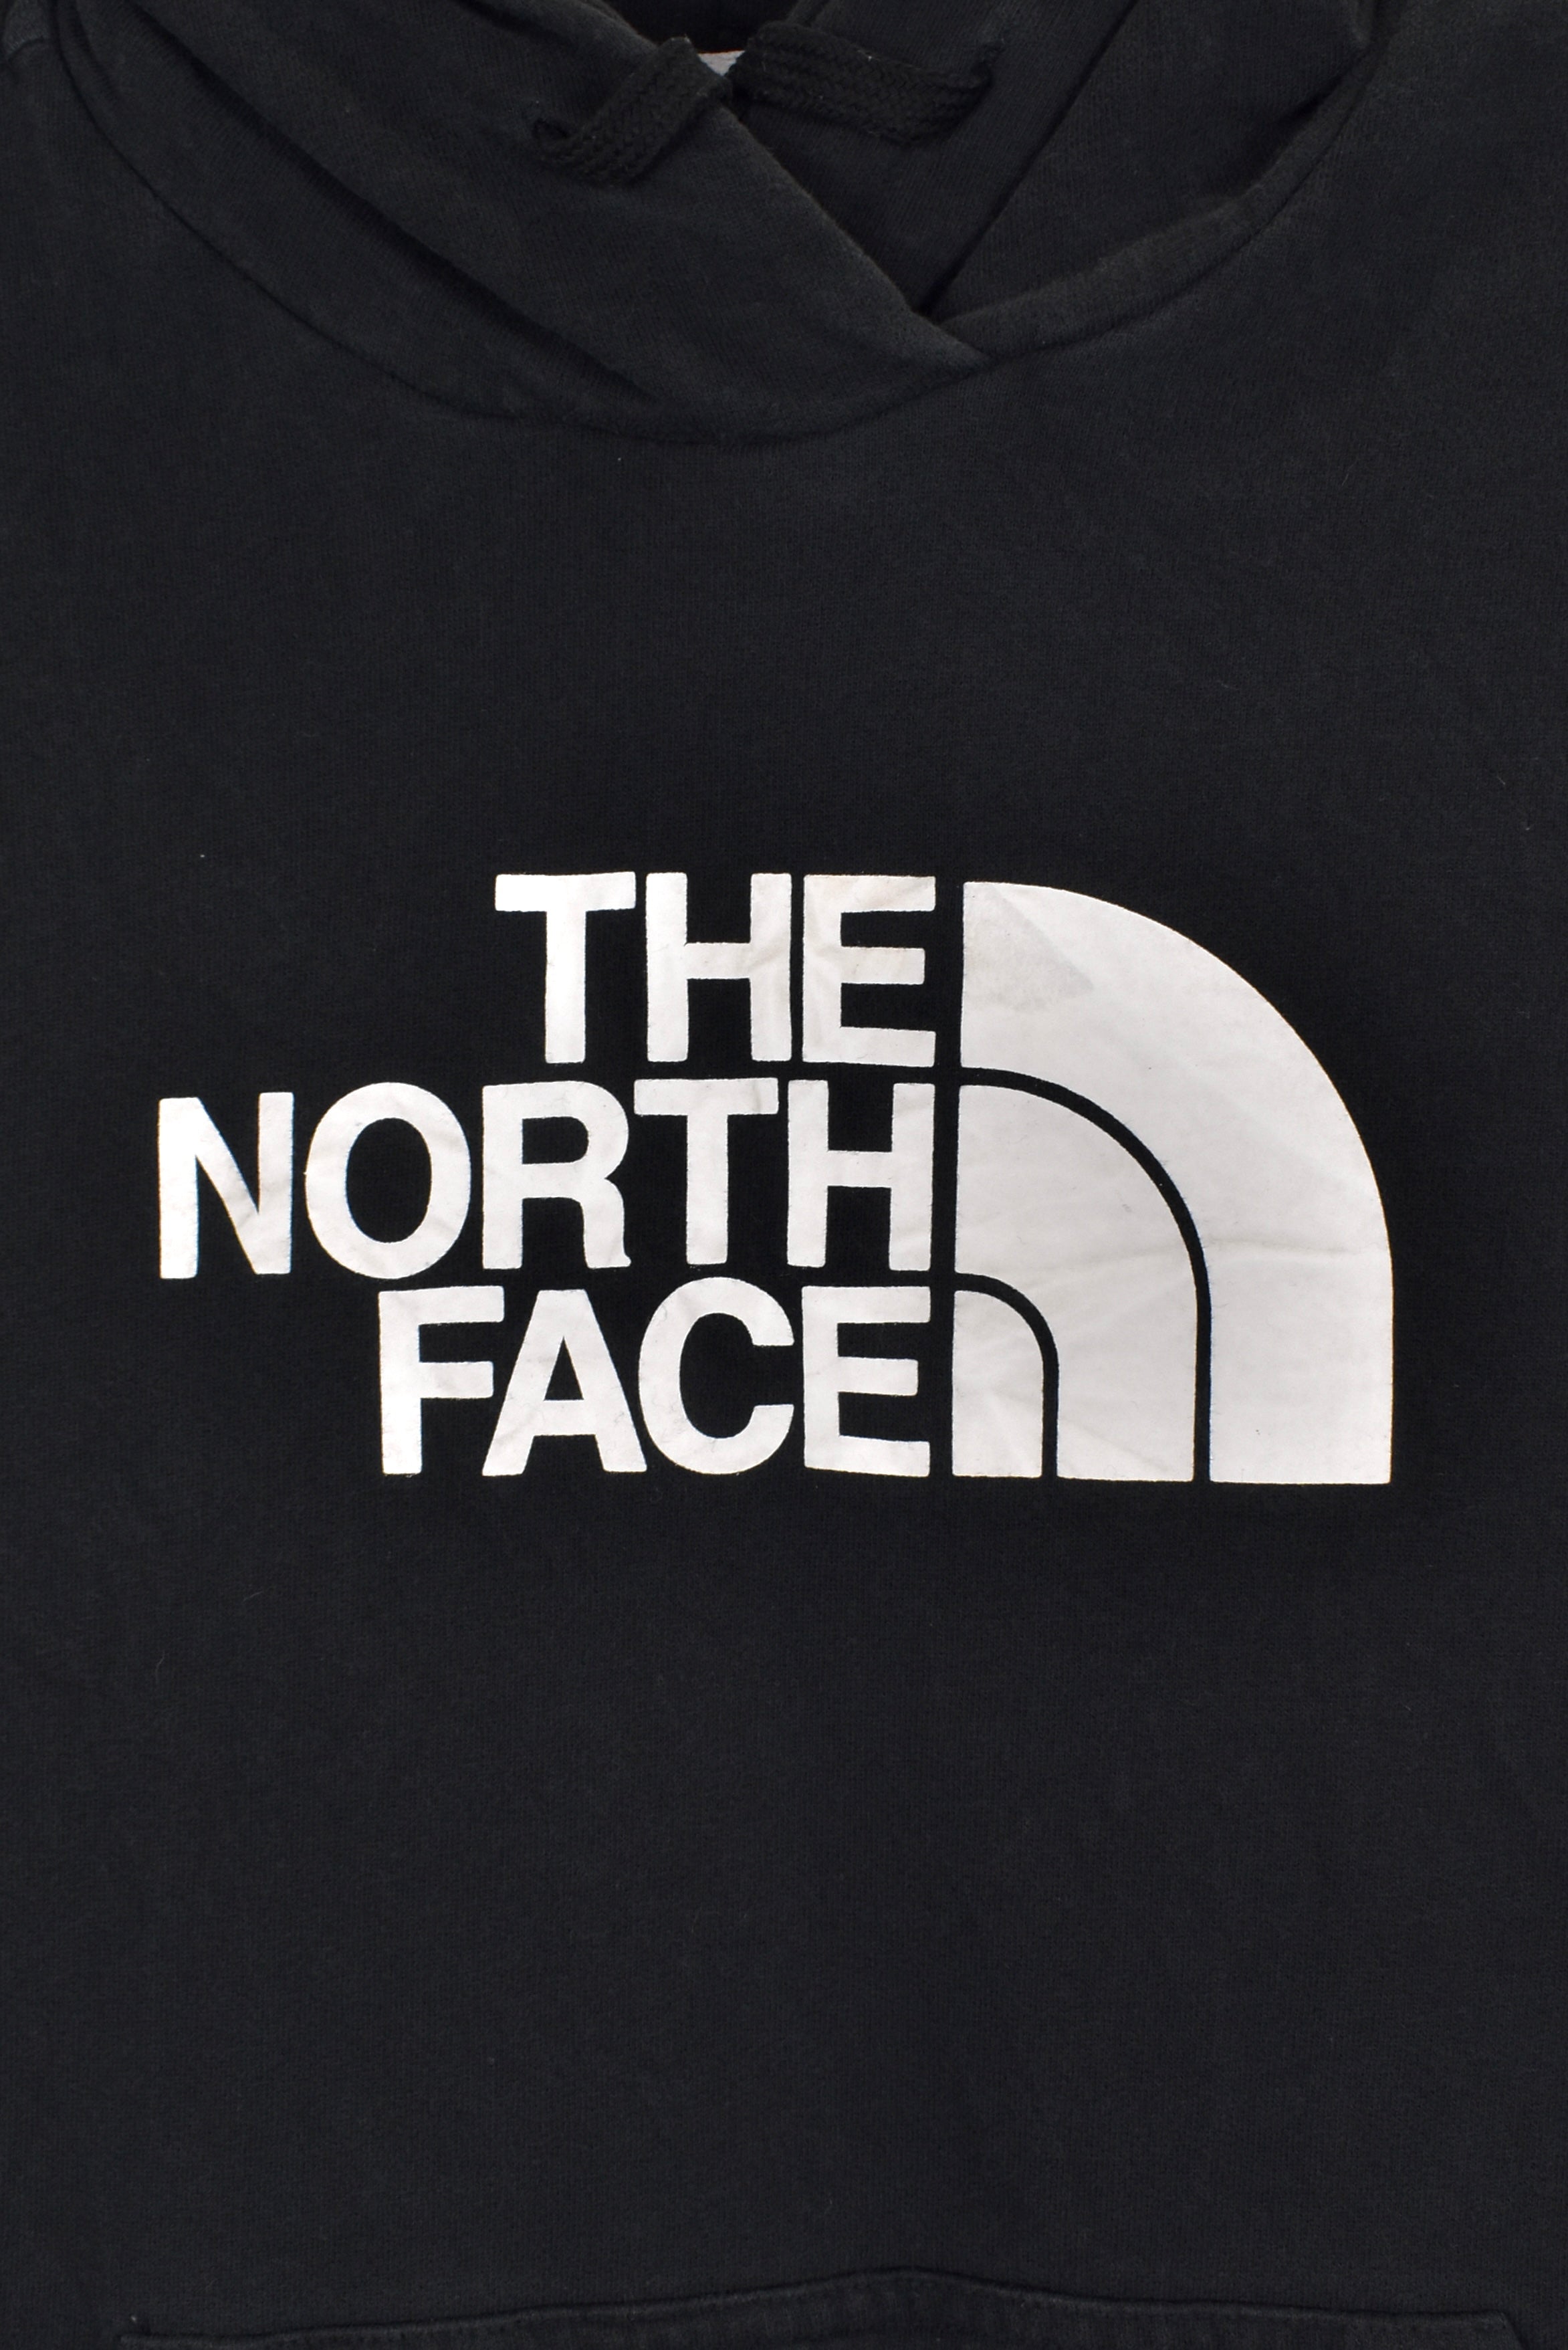 Vintage The North Face hoodie, black graphic sweatshirt - Large